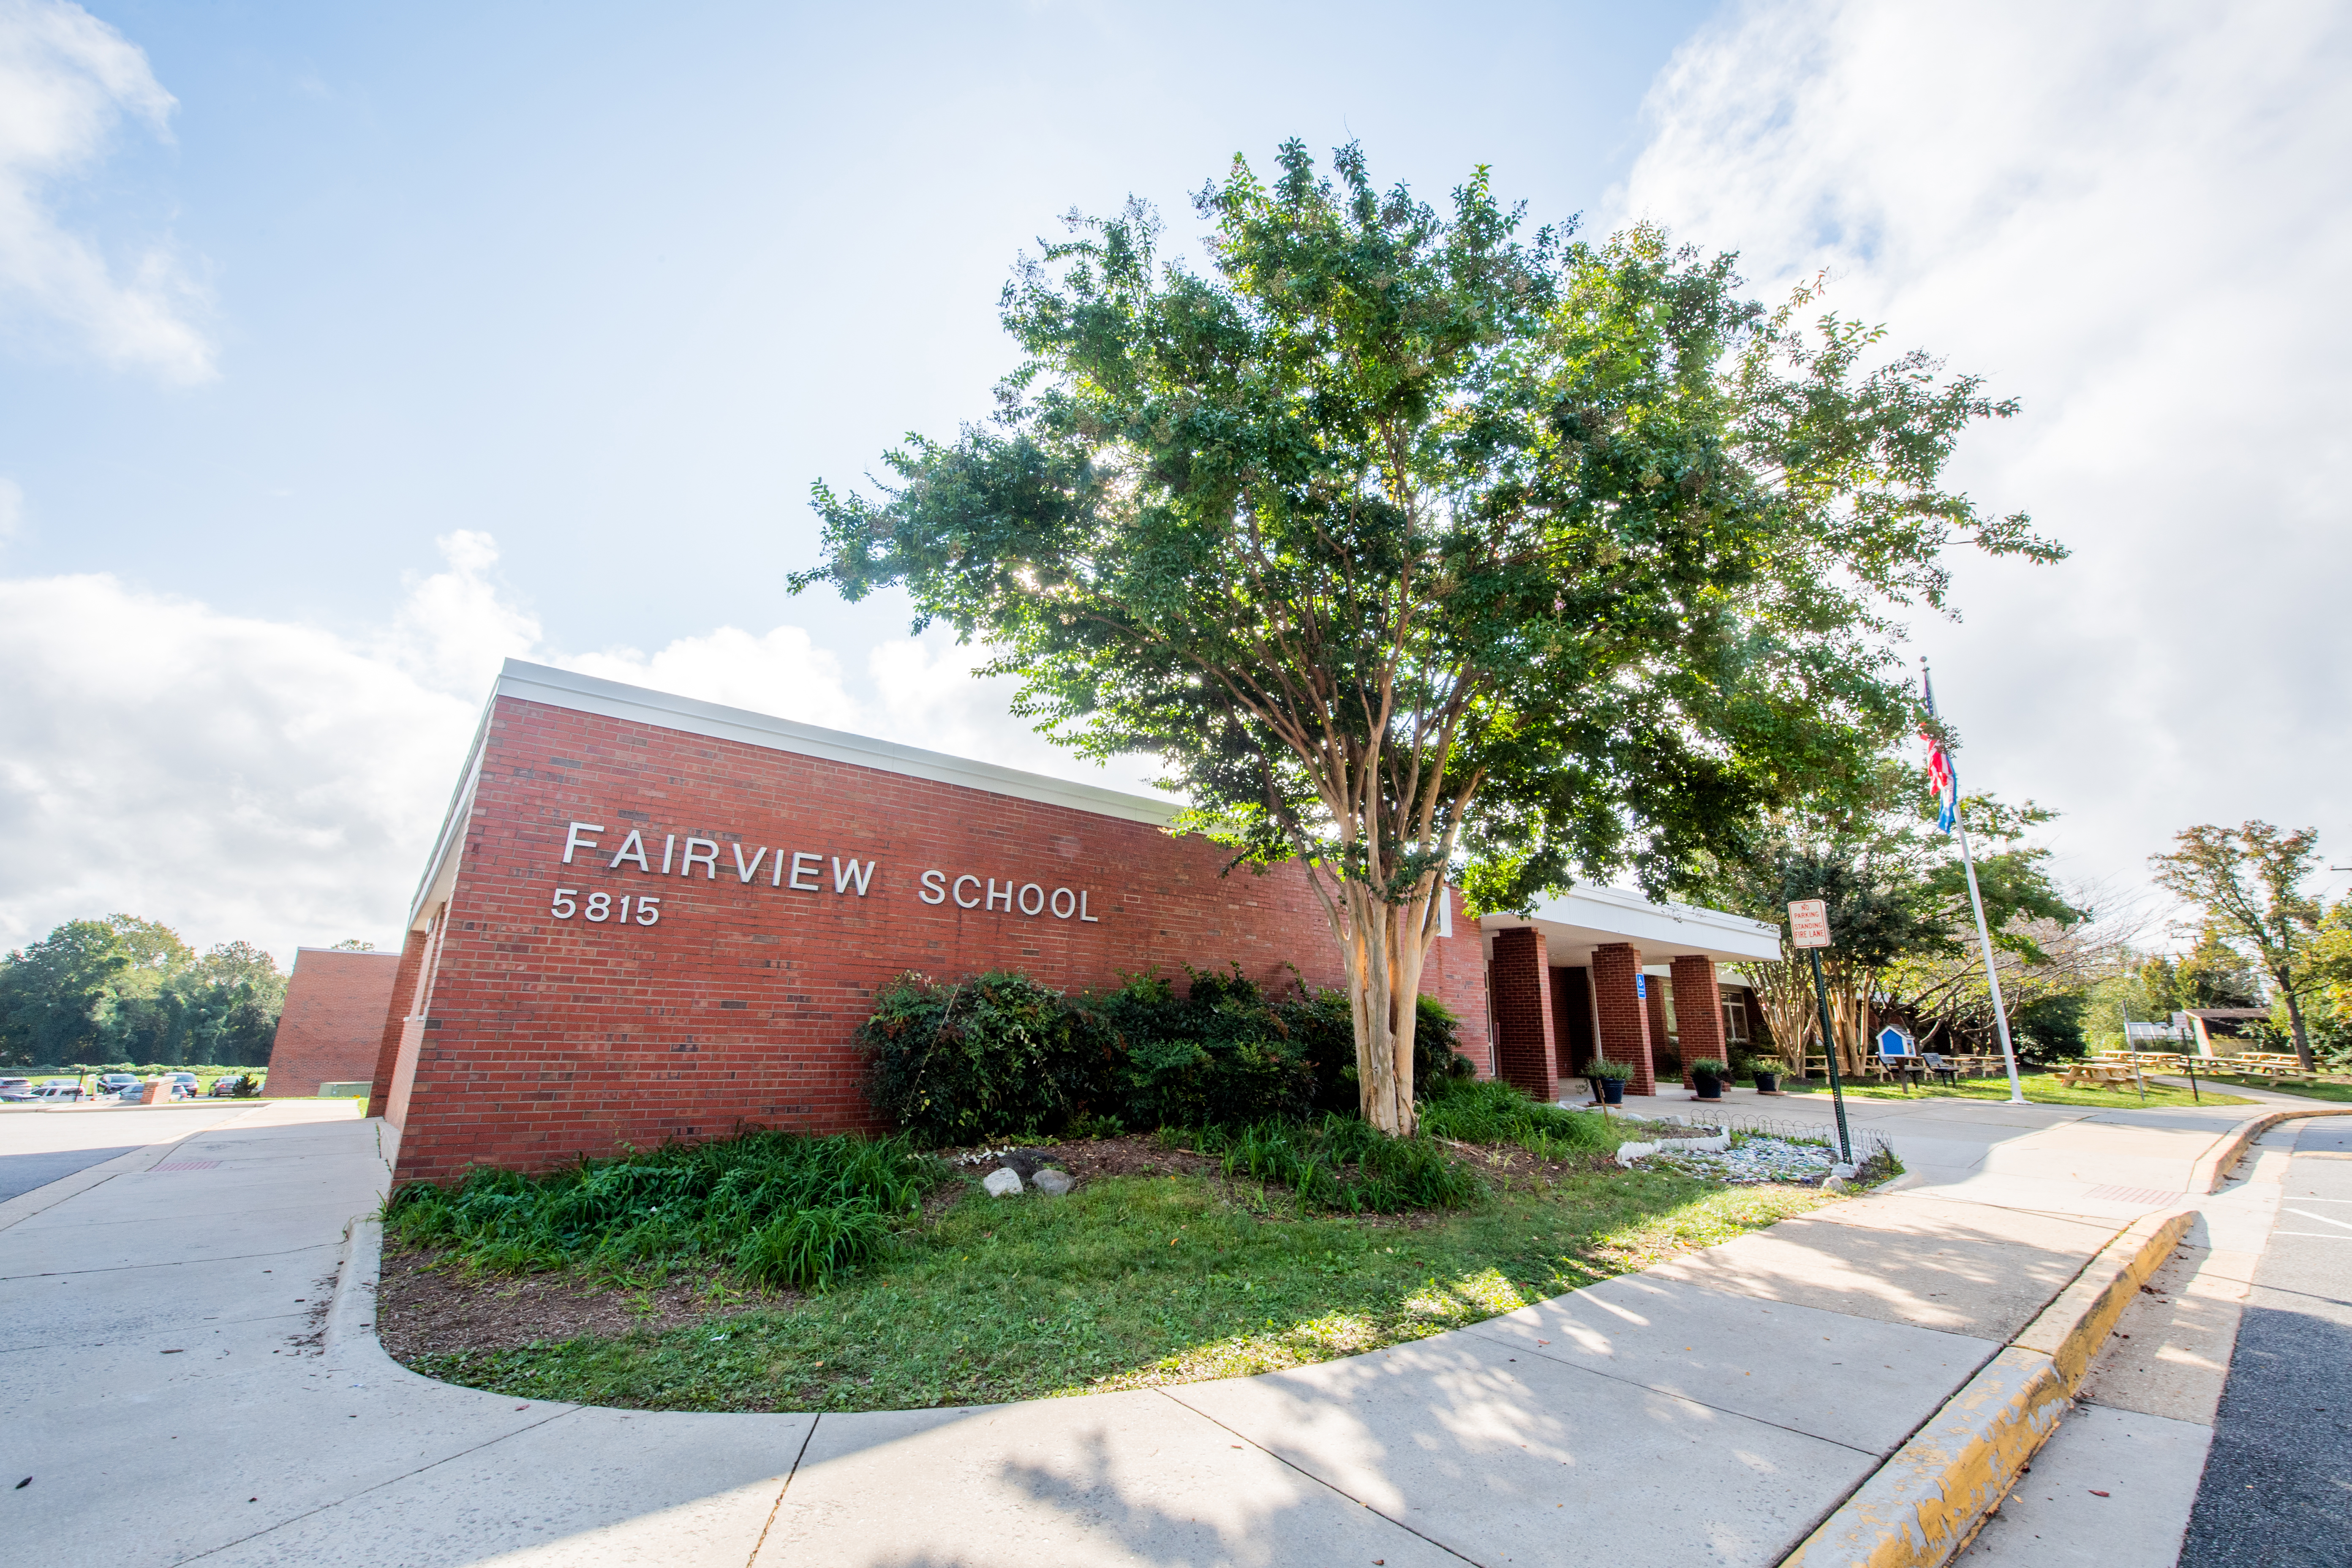 Exterior shot of Fairview Elementary School building in Fairfax Station, Va.